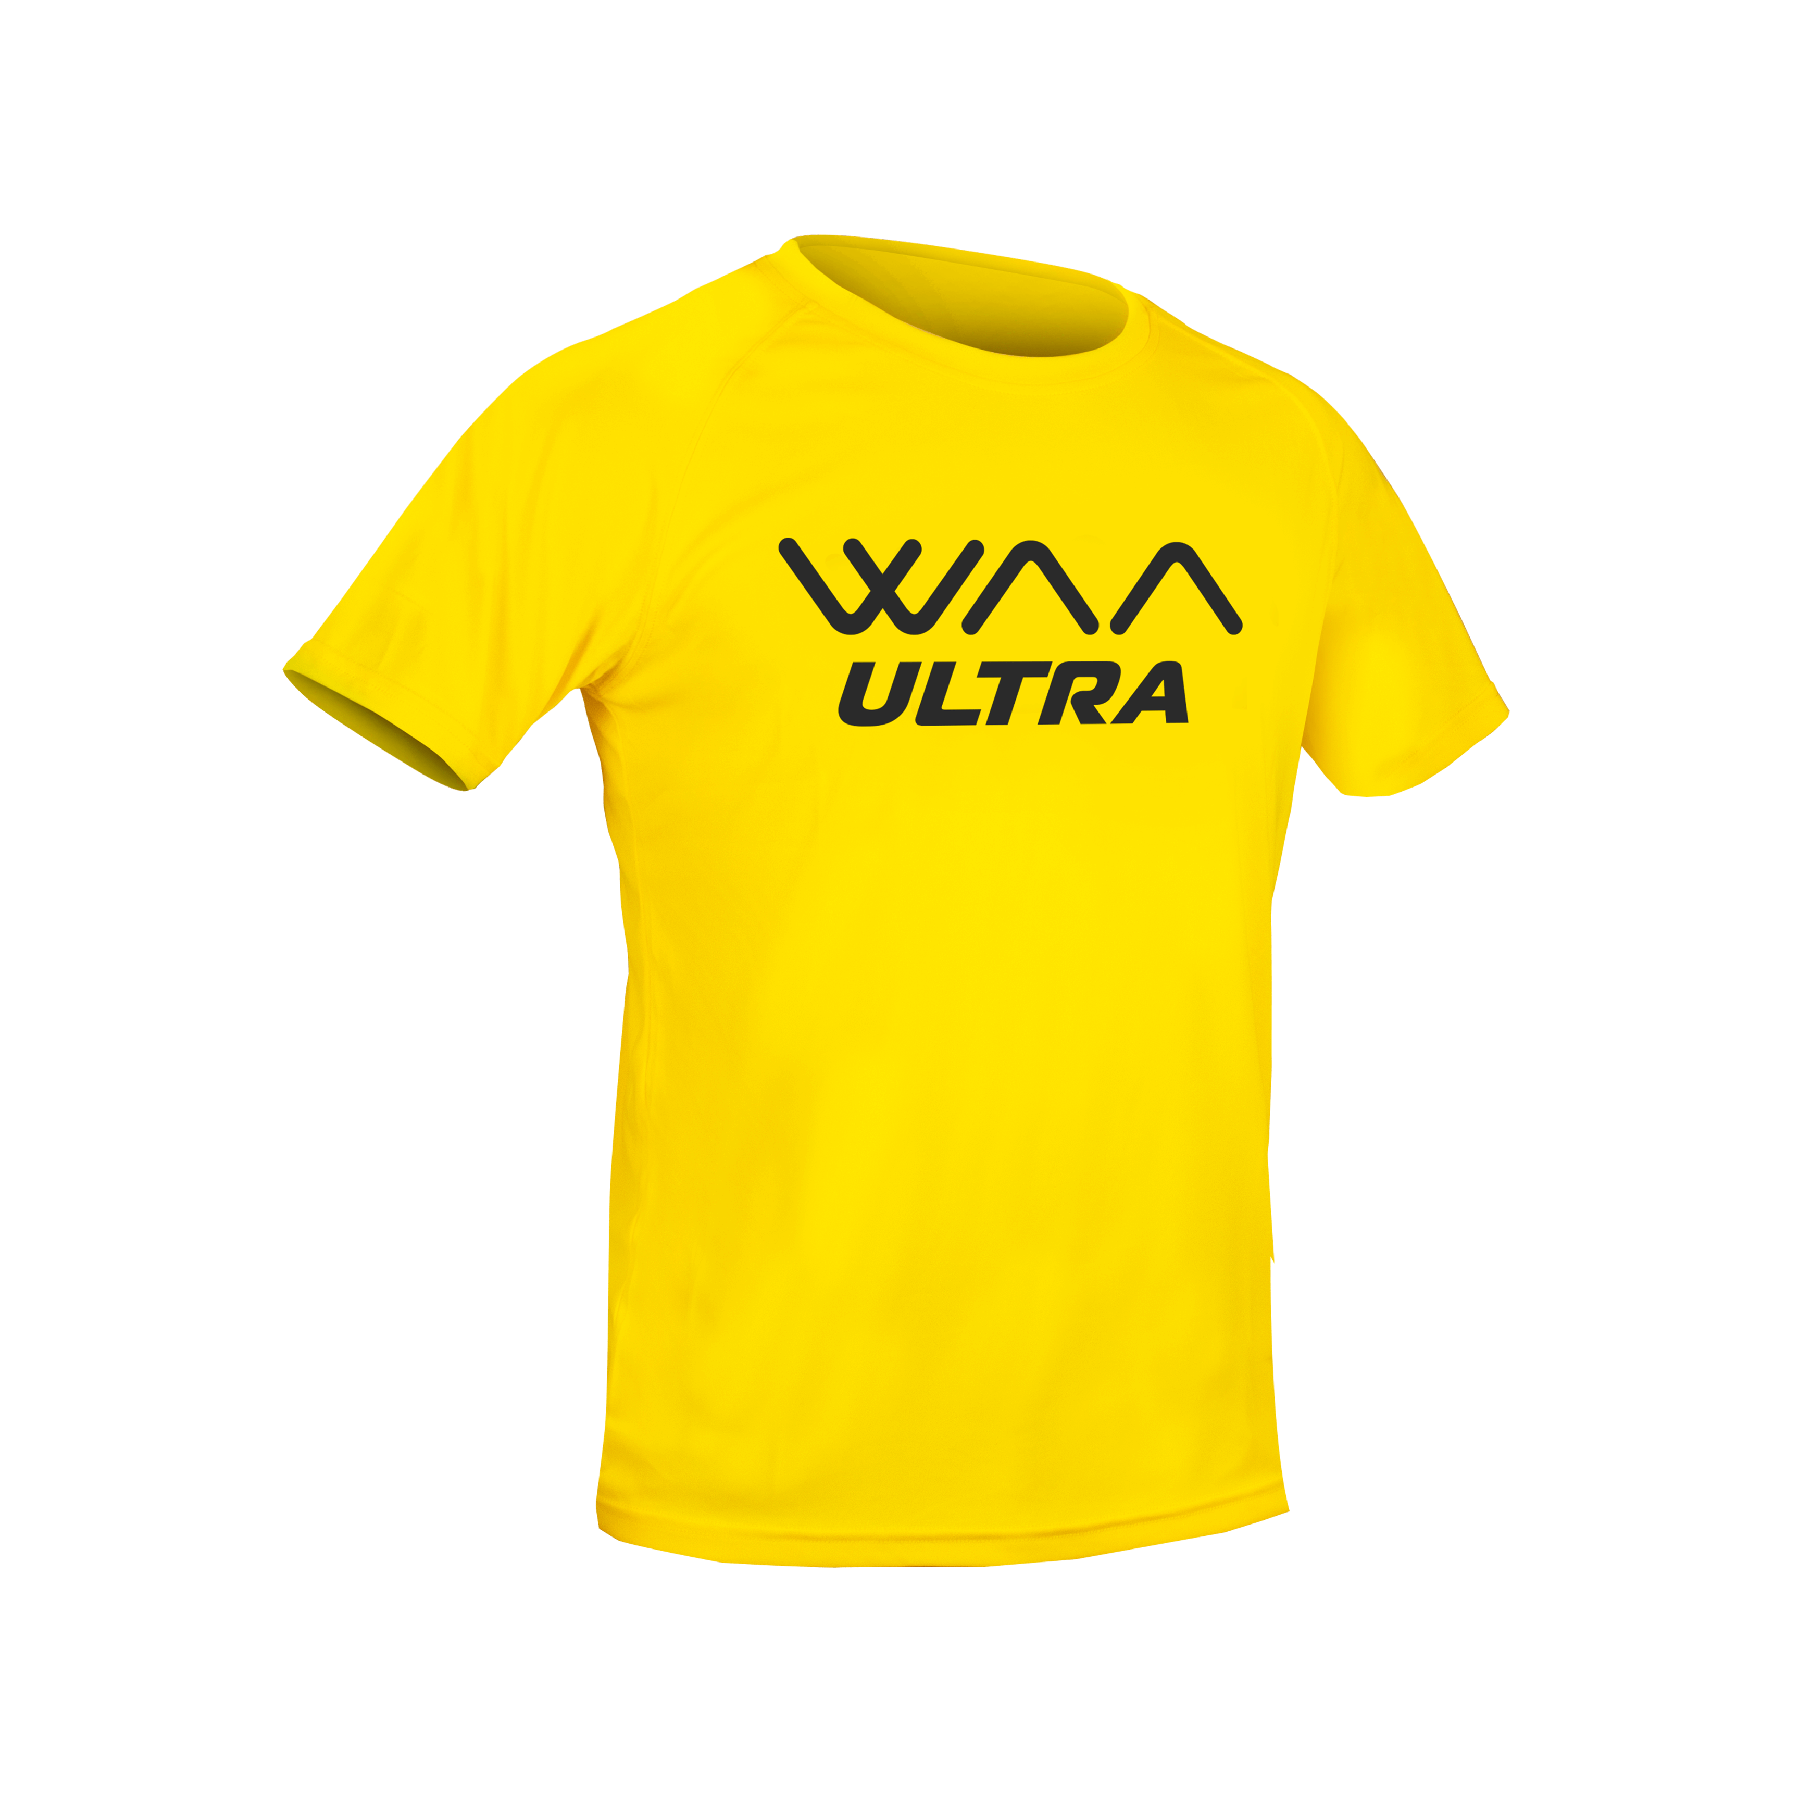 Camiseta técnica Running Trail Run Mujer Yellow Fade E - Trail Mooquer